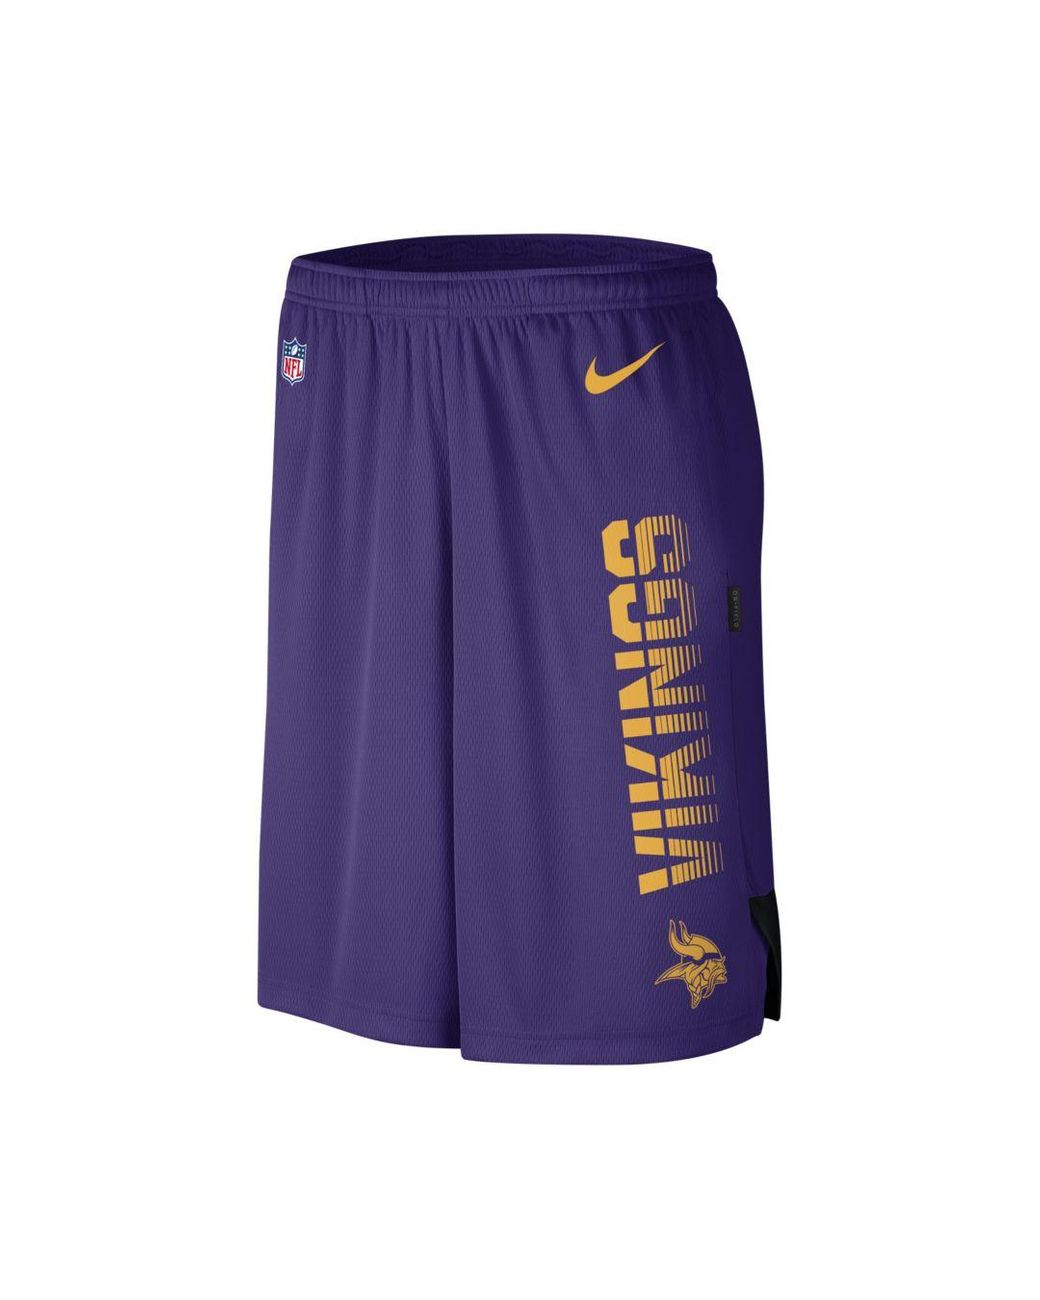 Nike Breathe Player (nfl Vikings) Shorts in Purple for Men - Lyst